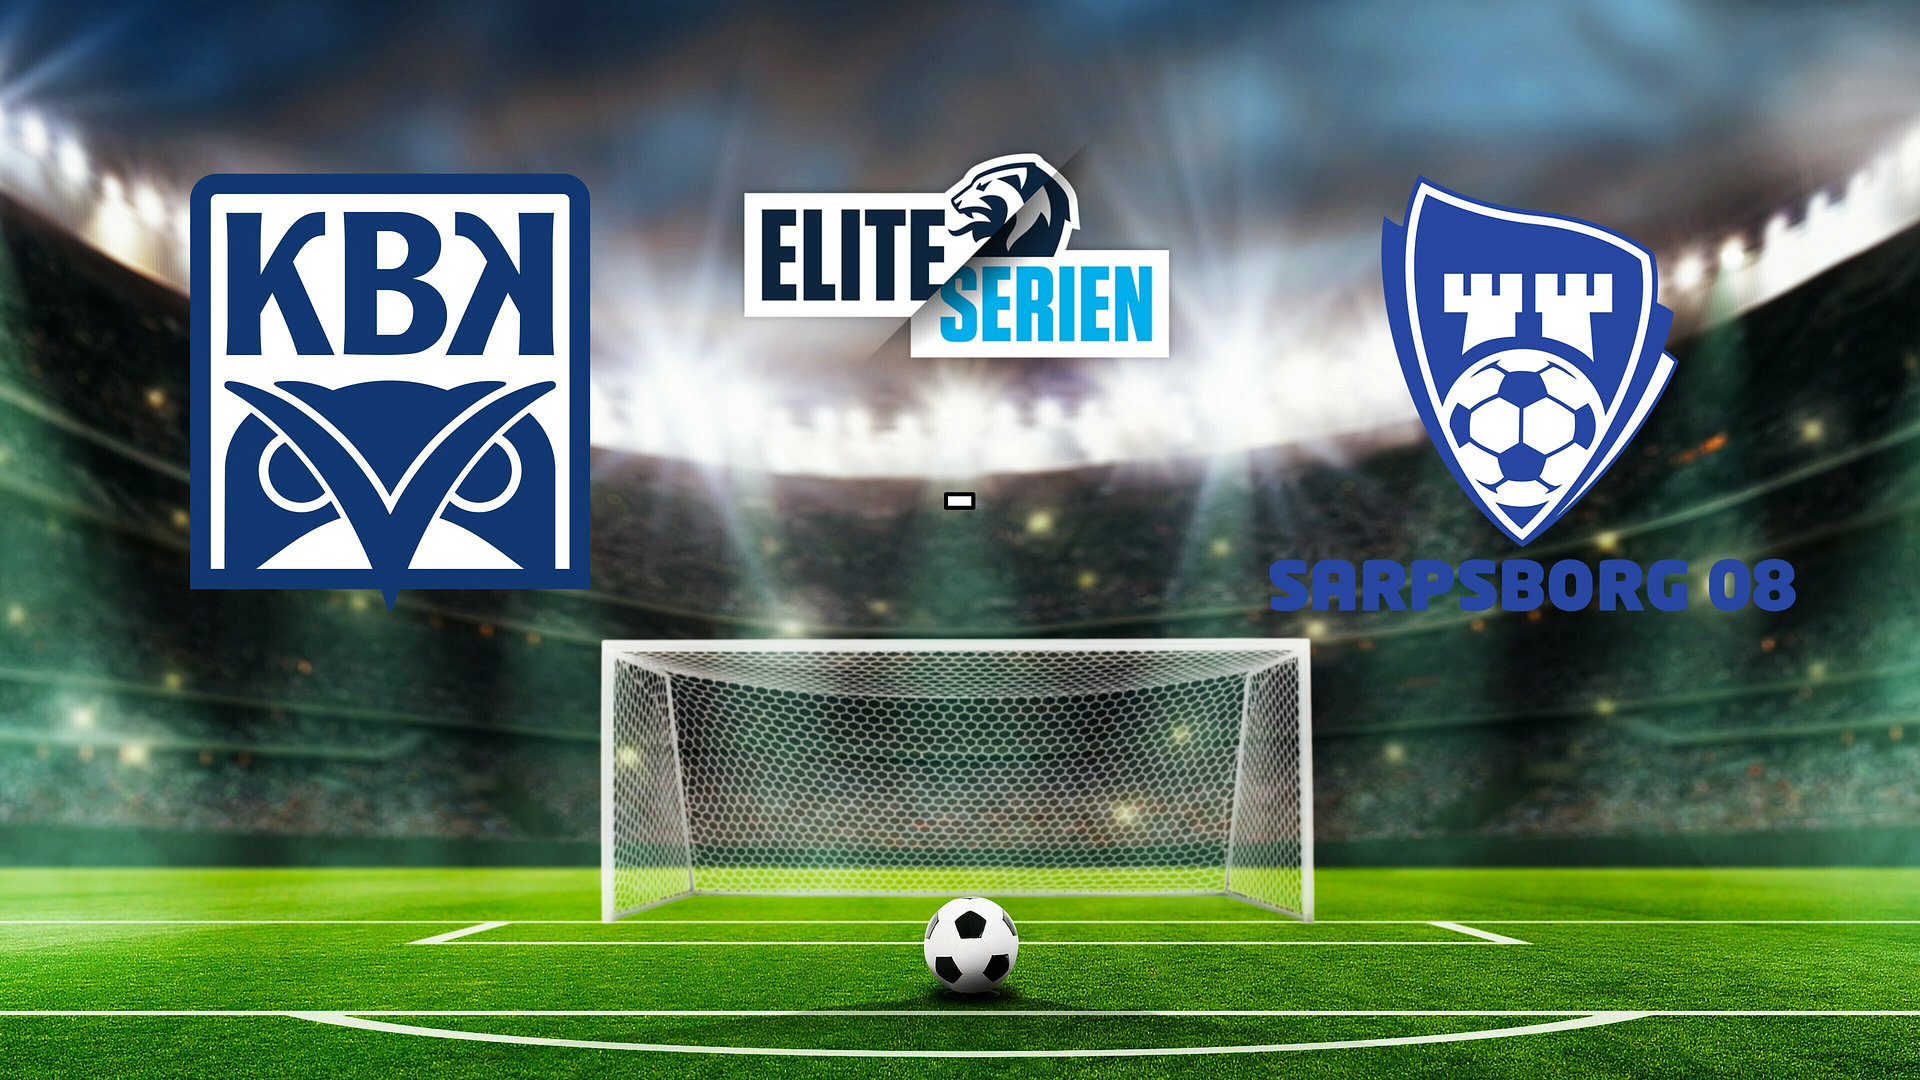 Fotball: Eliteserien: Kristiansund - Sarpsborg 08